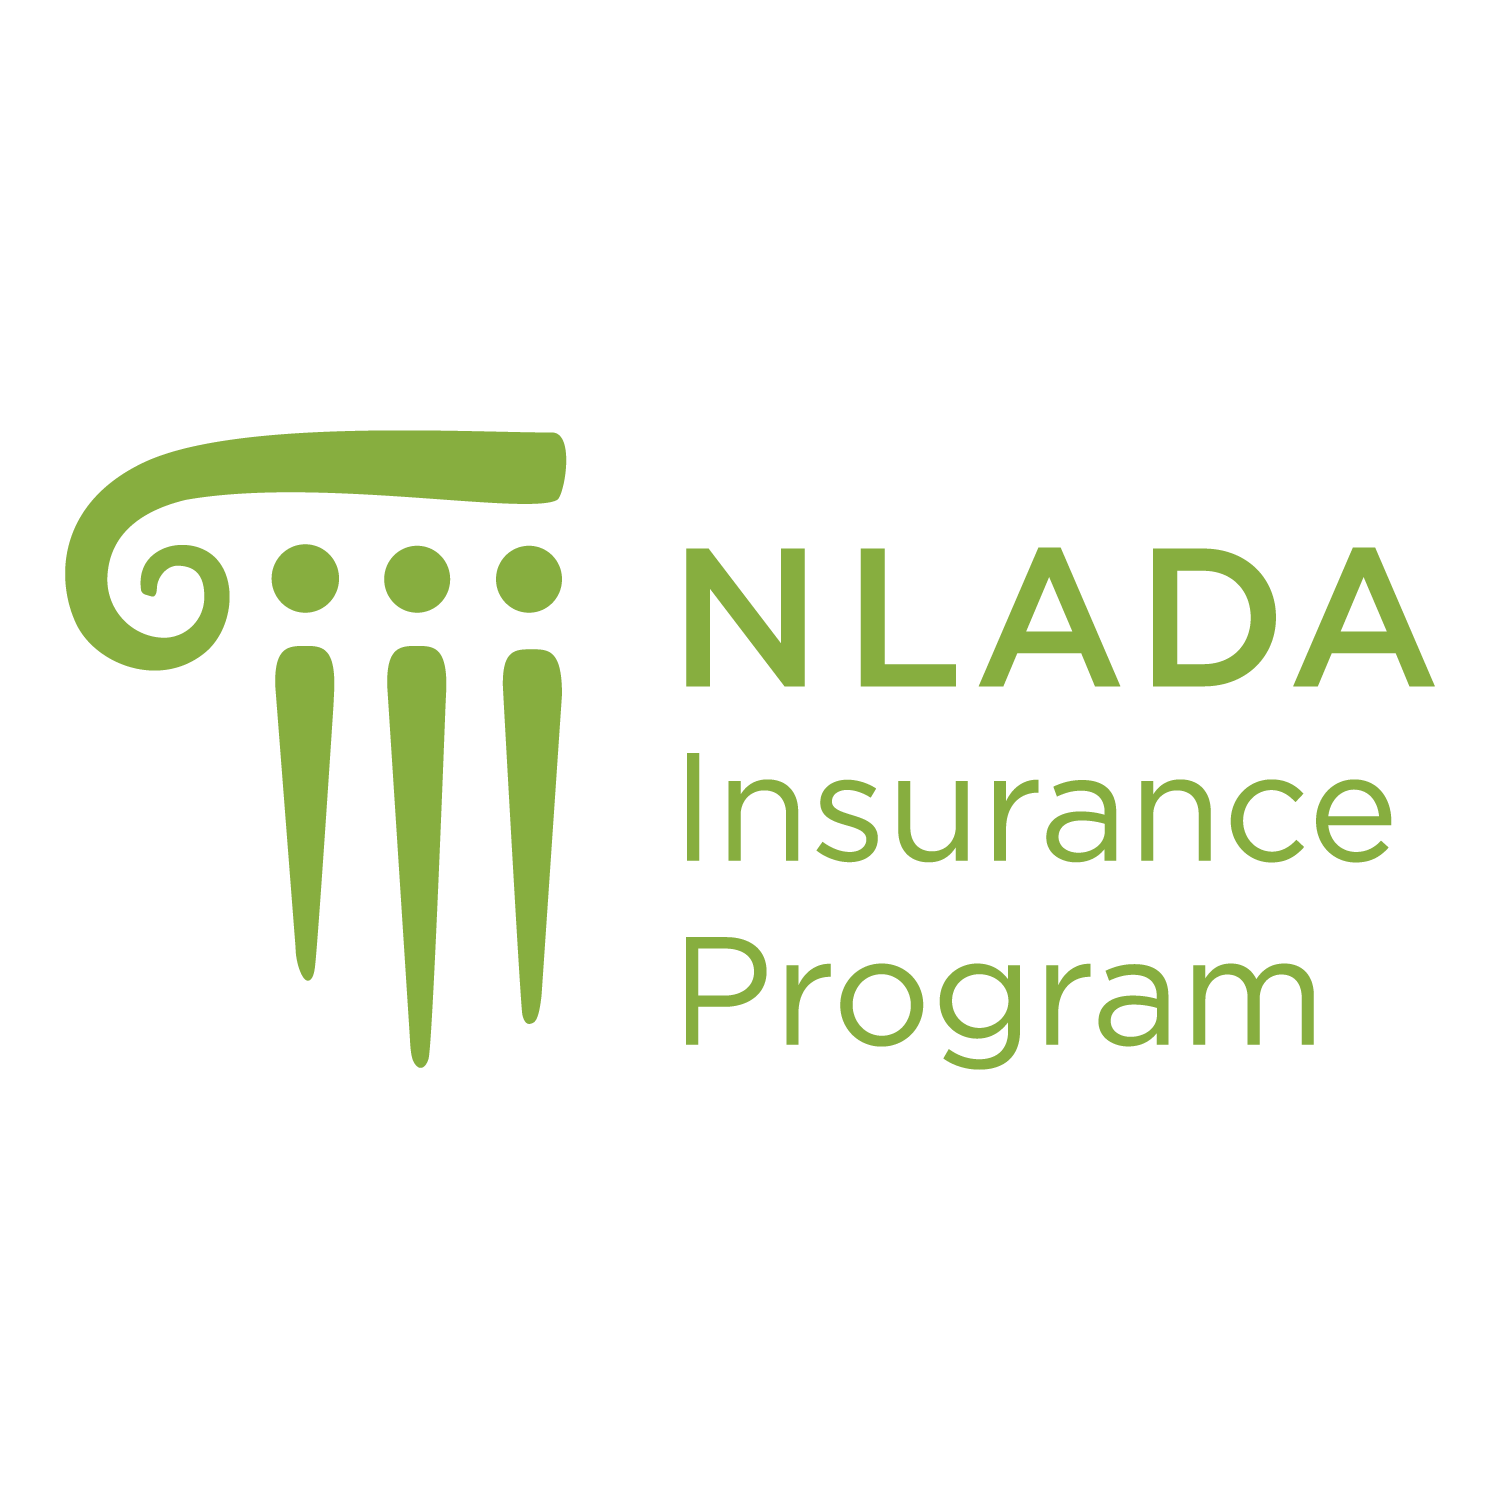 NLADA Insurance Program 